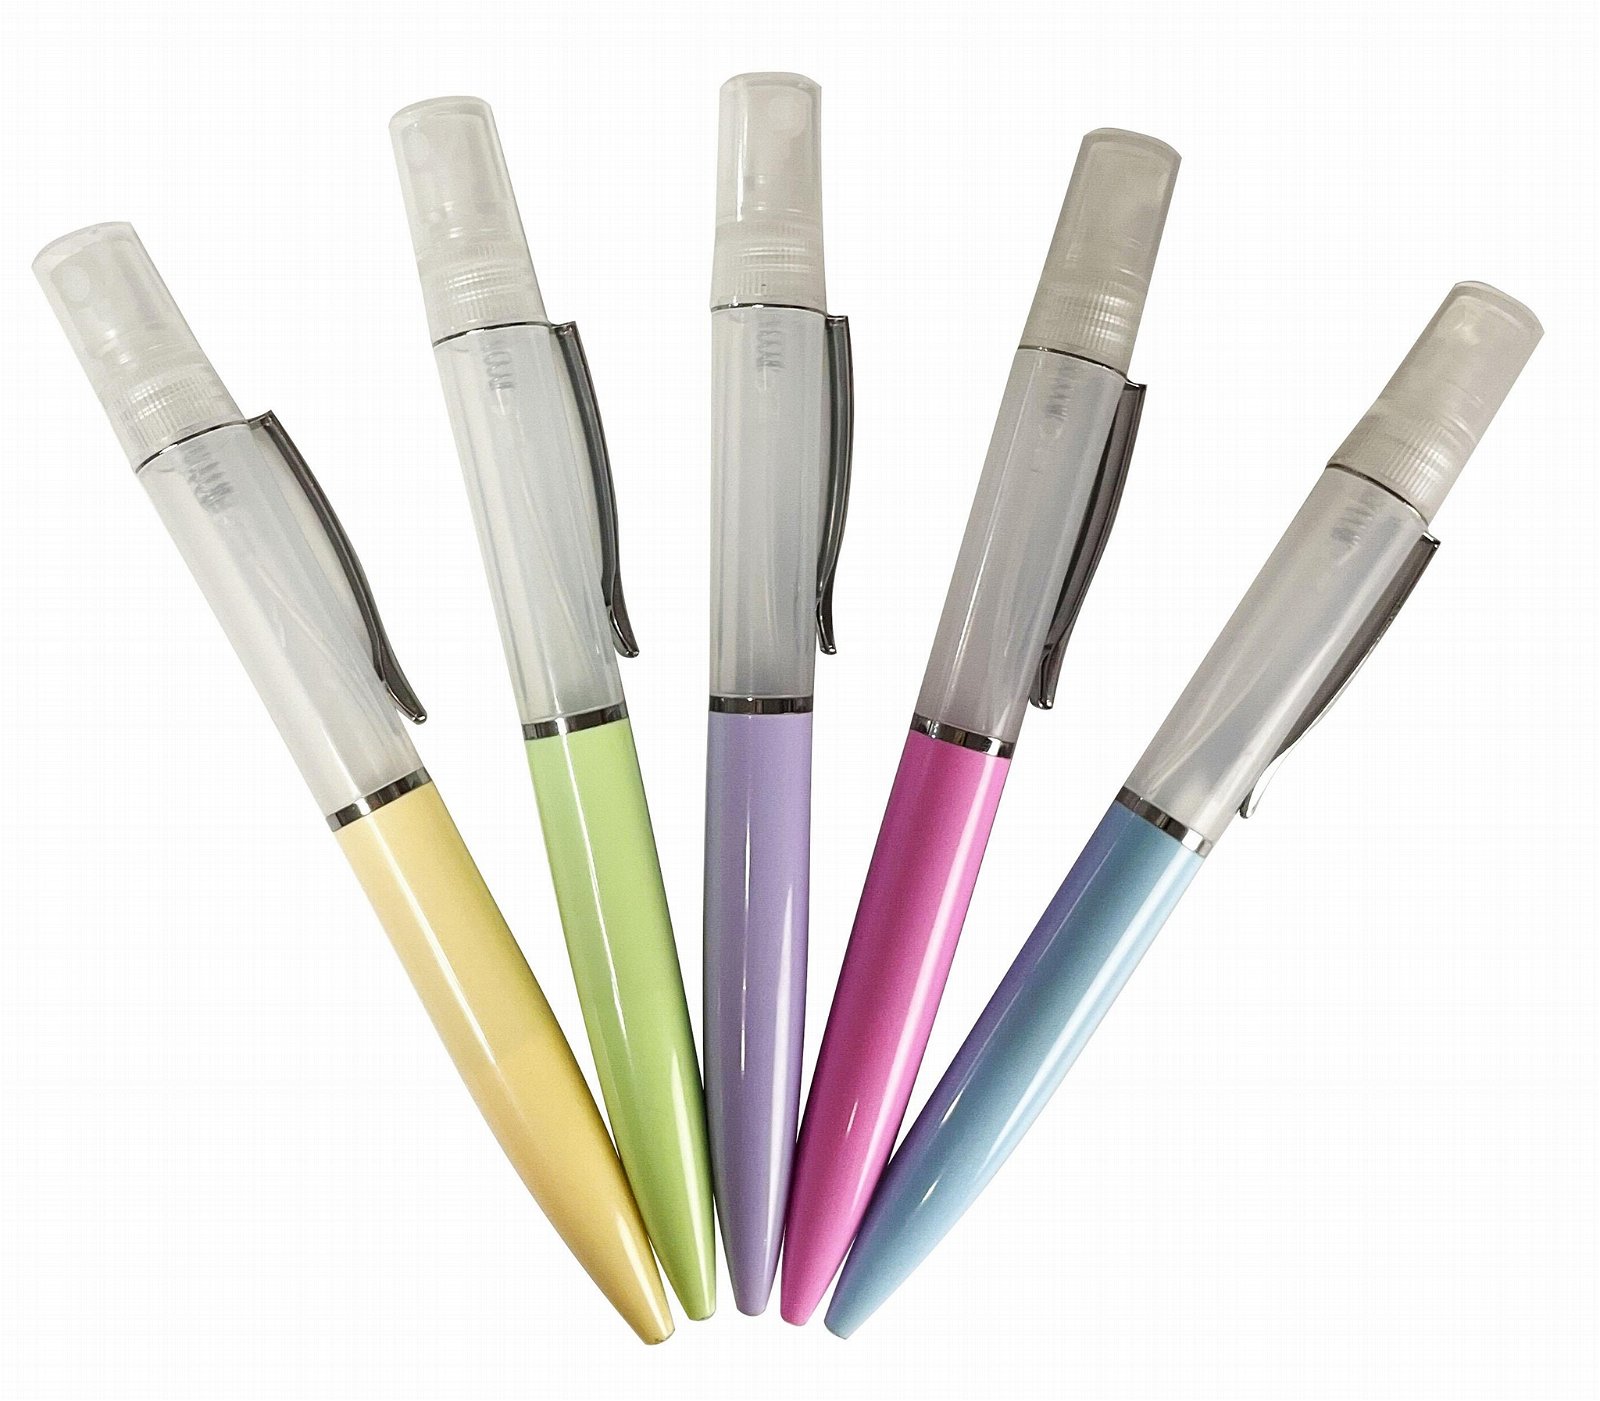 Ballpoint pen with spray bottle for hand sanitizer, alcohol hand sanitizer pens 4